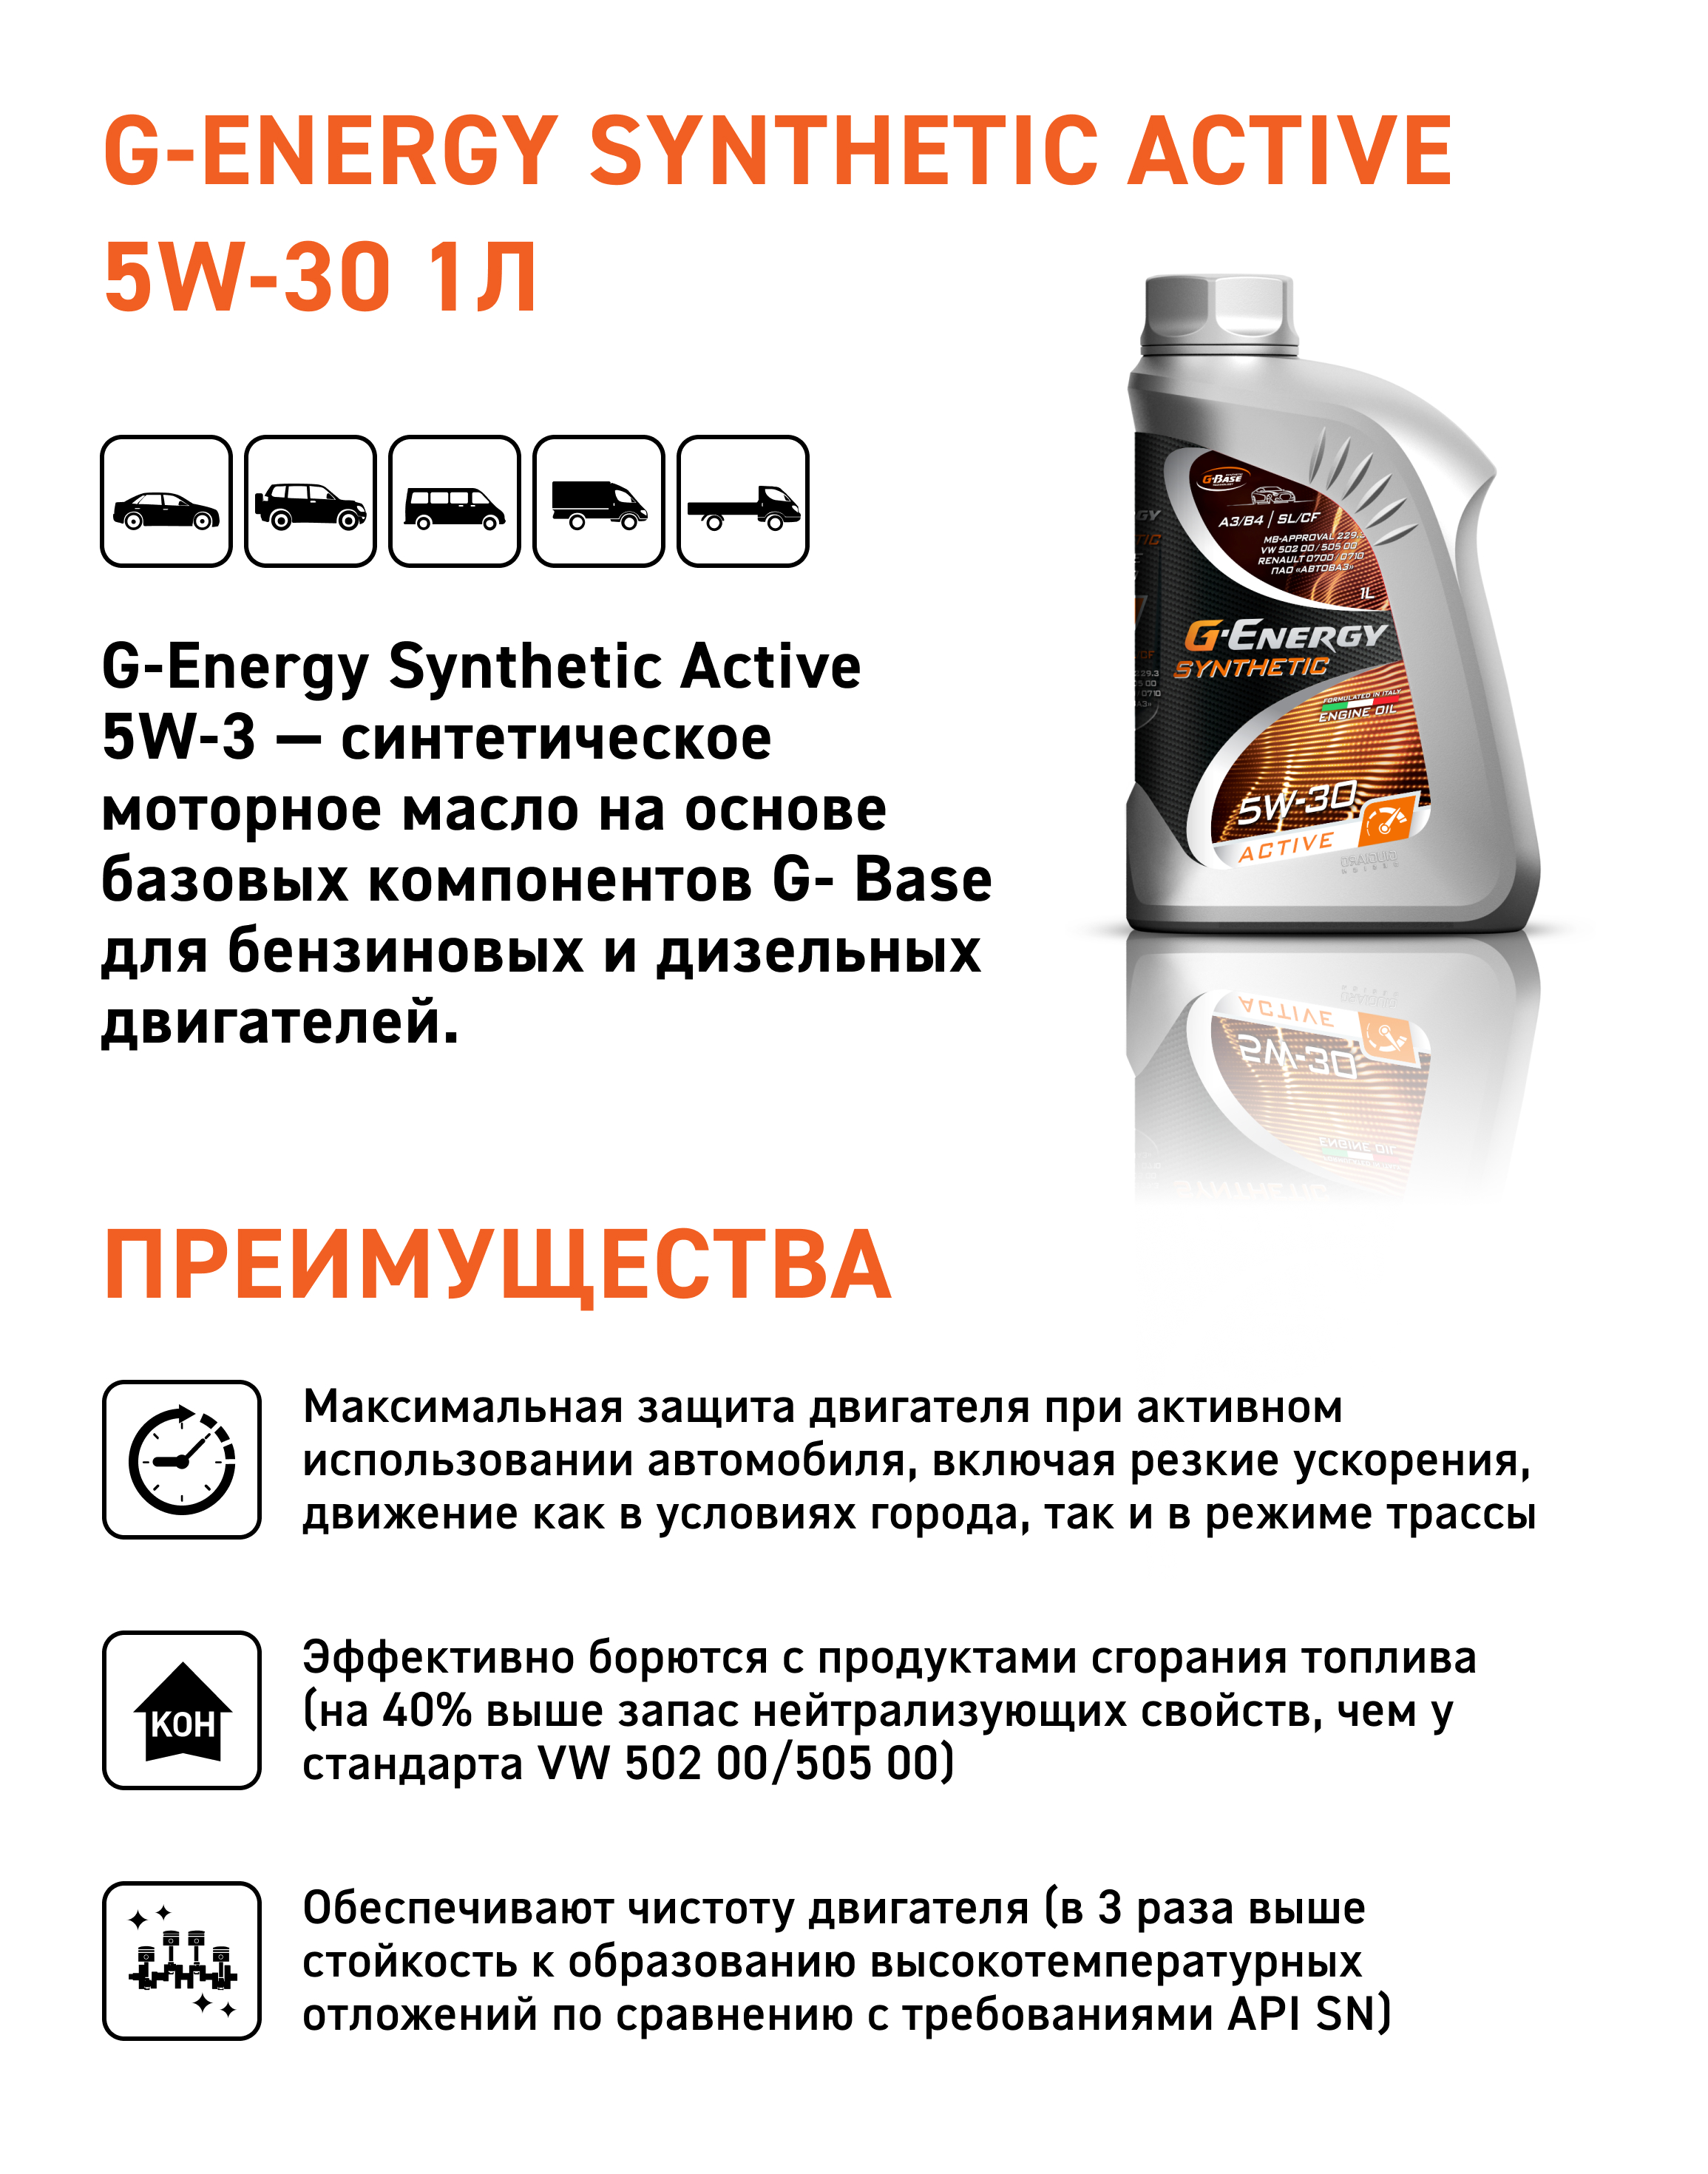 G-Energy Synthetic Active 5w-30. Моторное масло экология. Моторное масло будущего. Модель с канистрами g-Energy.